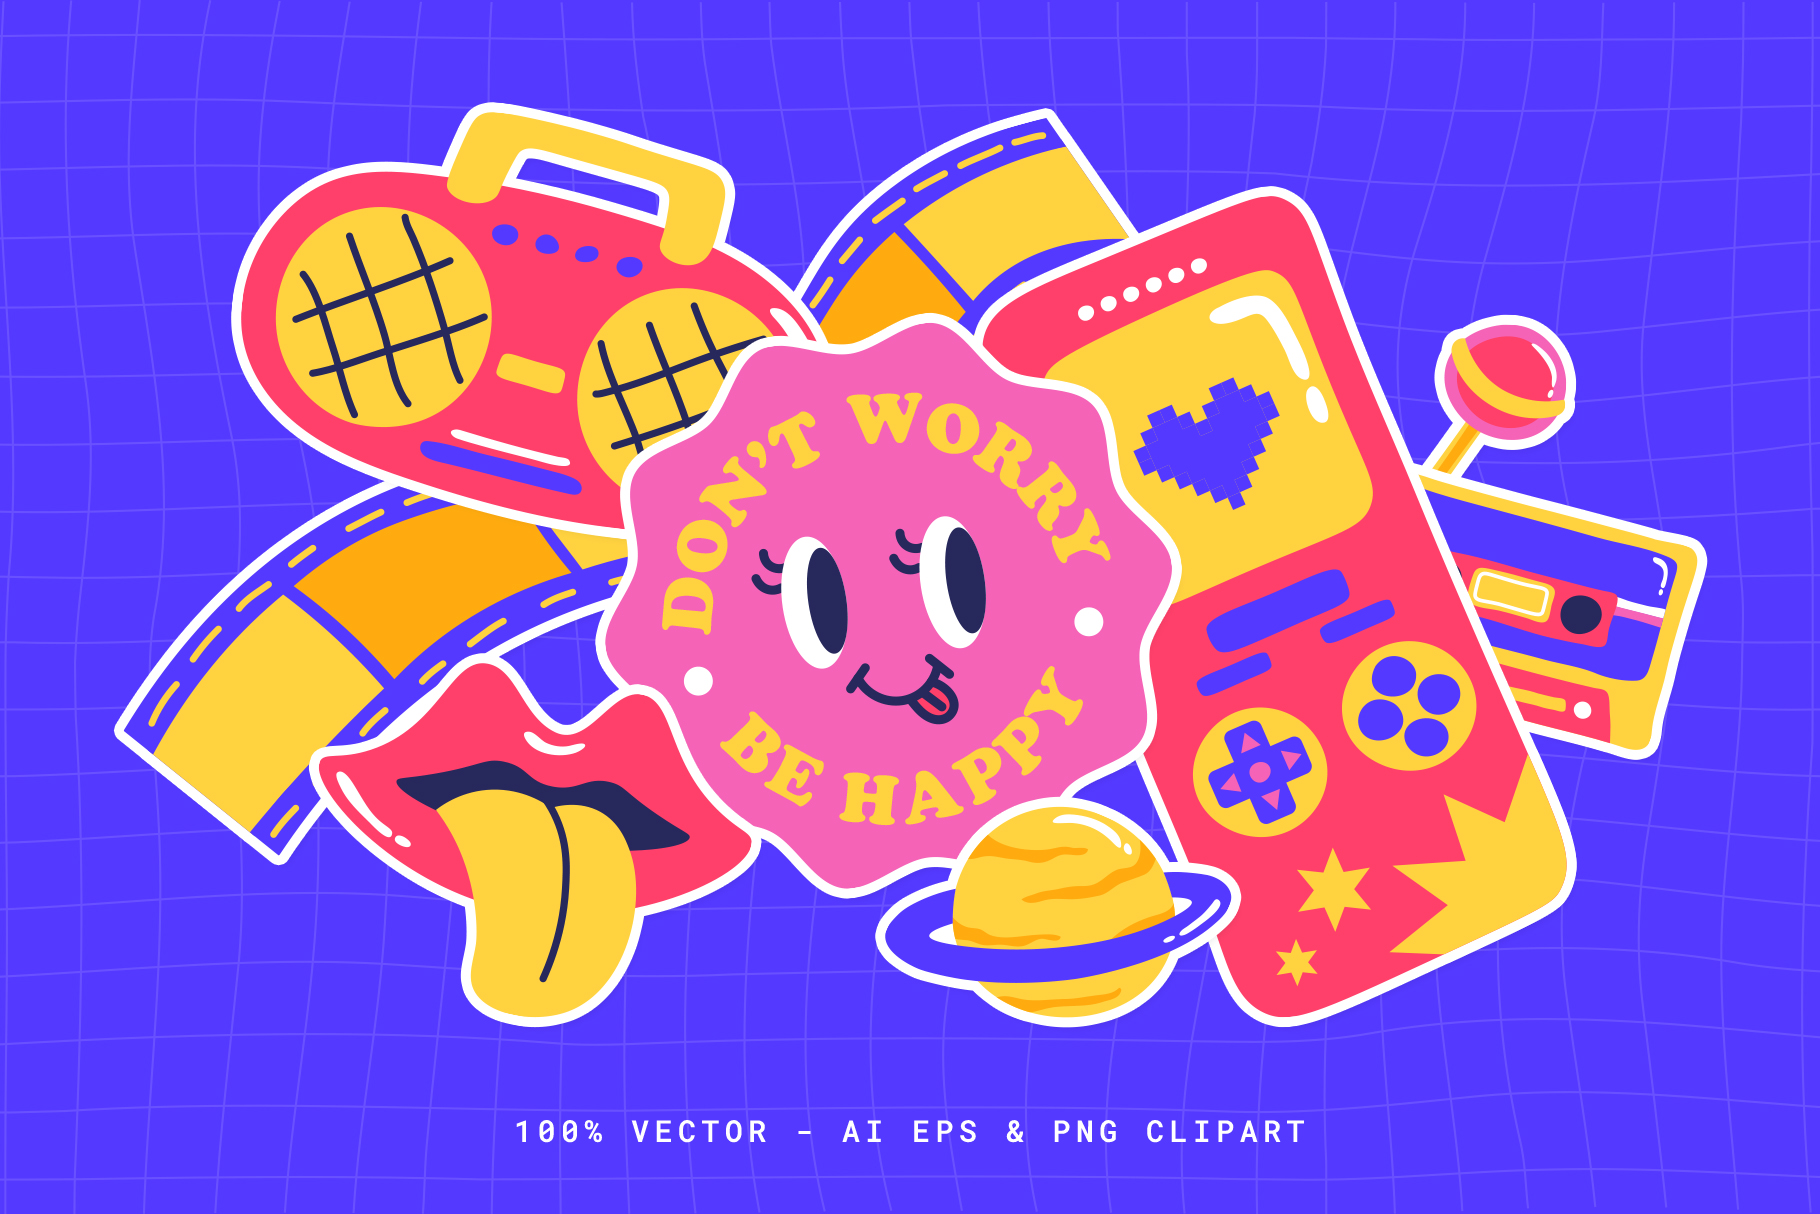 Y2K Stickers Illustration Set (AI, EPS, PNG Format)